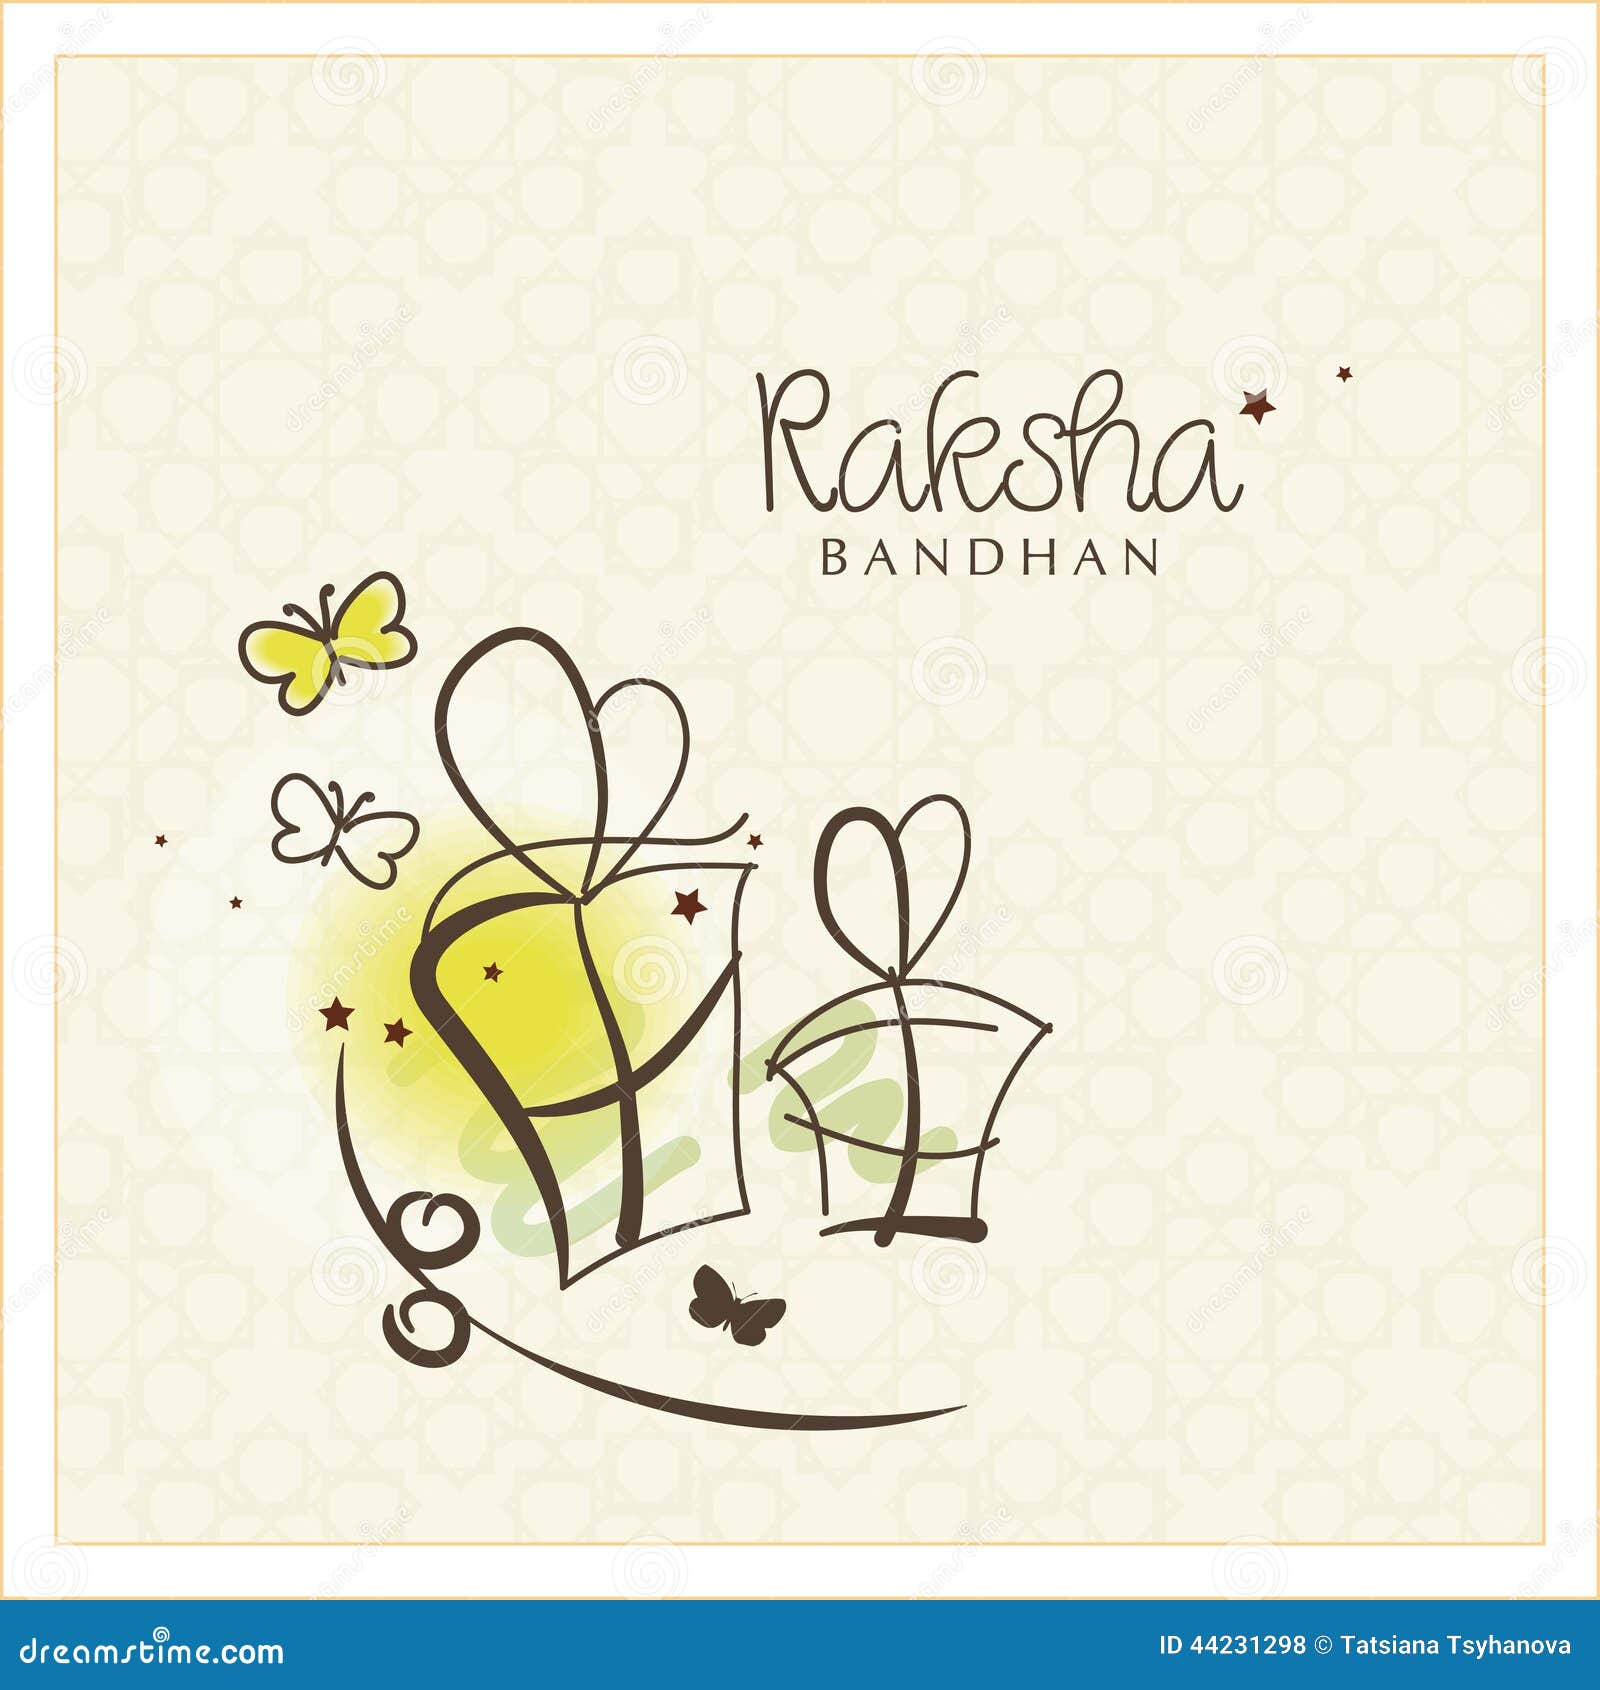 Raksha Bandhan Coloring Pages - Free Printable Coloring Pages for Kids